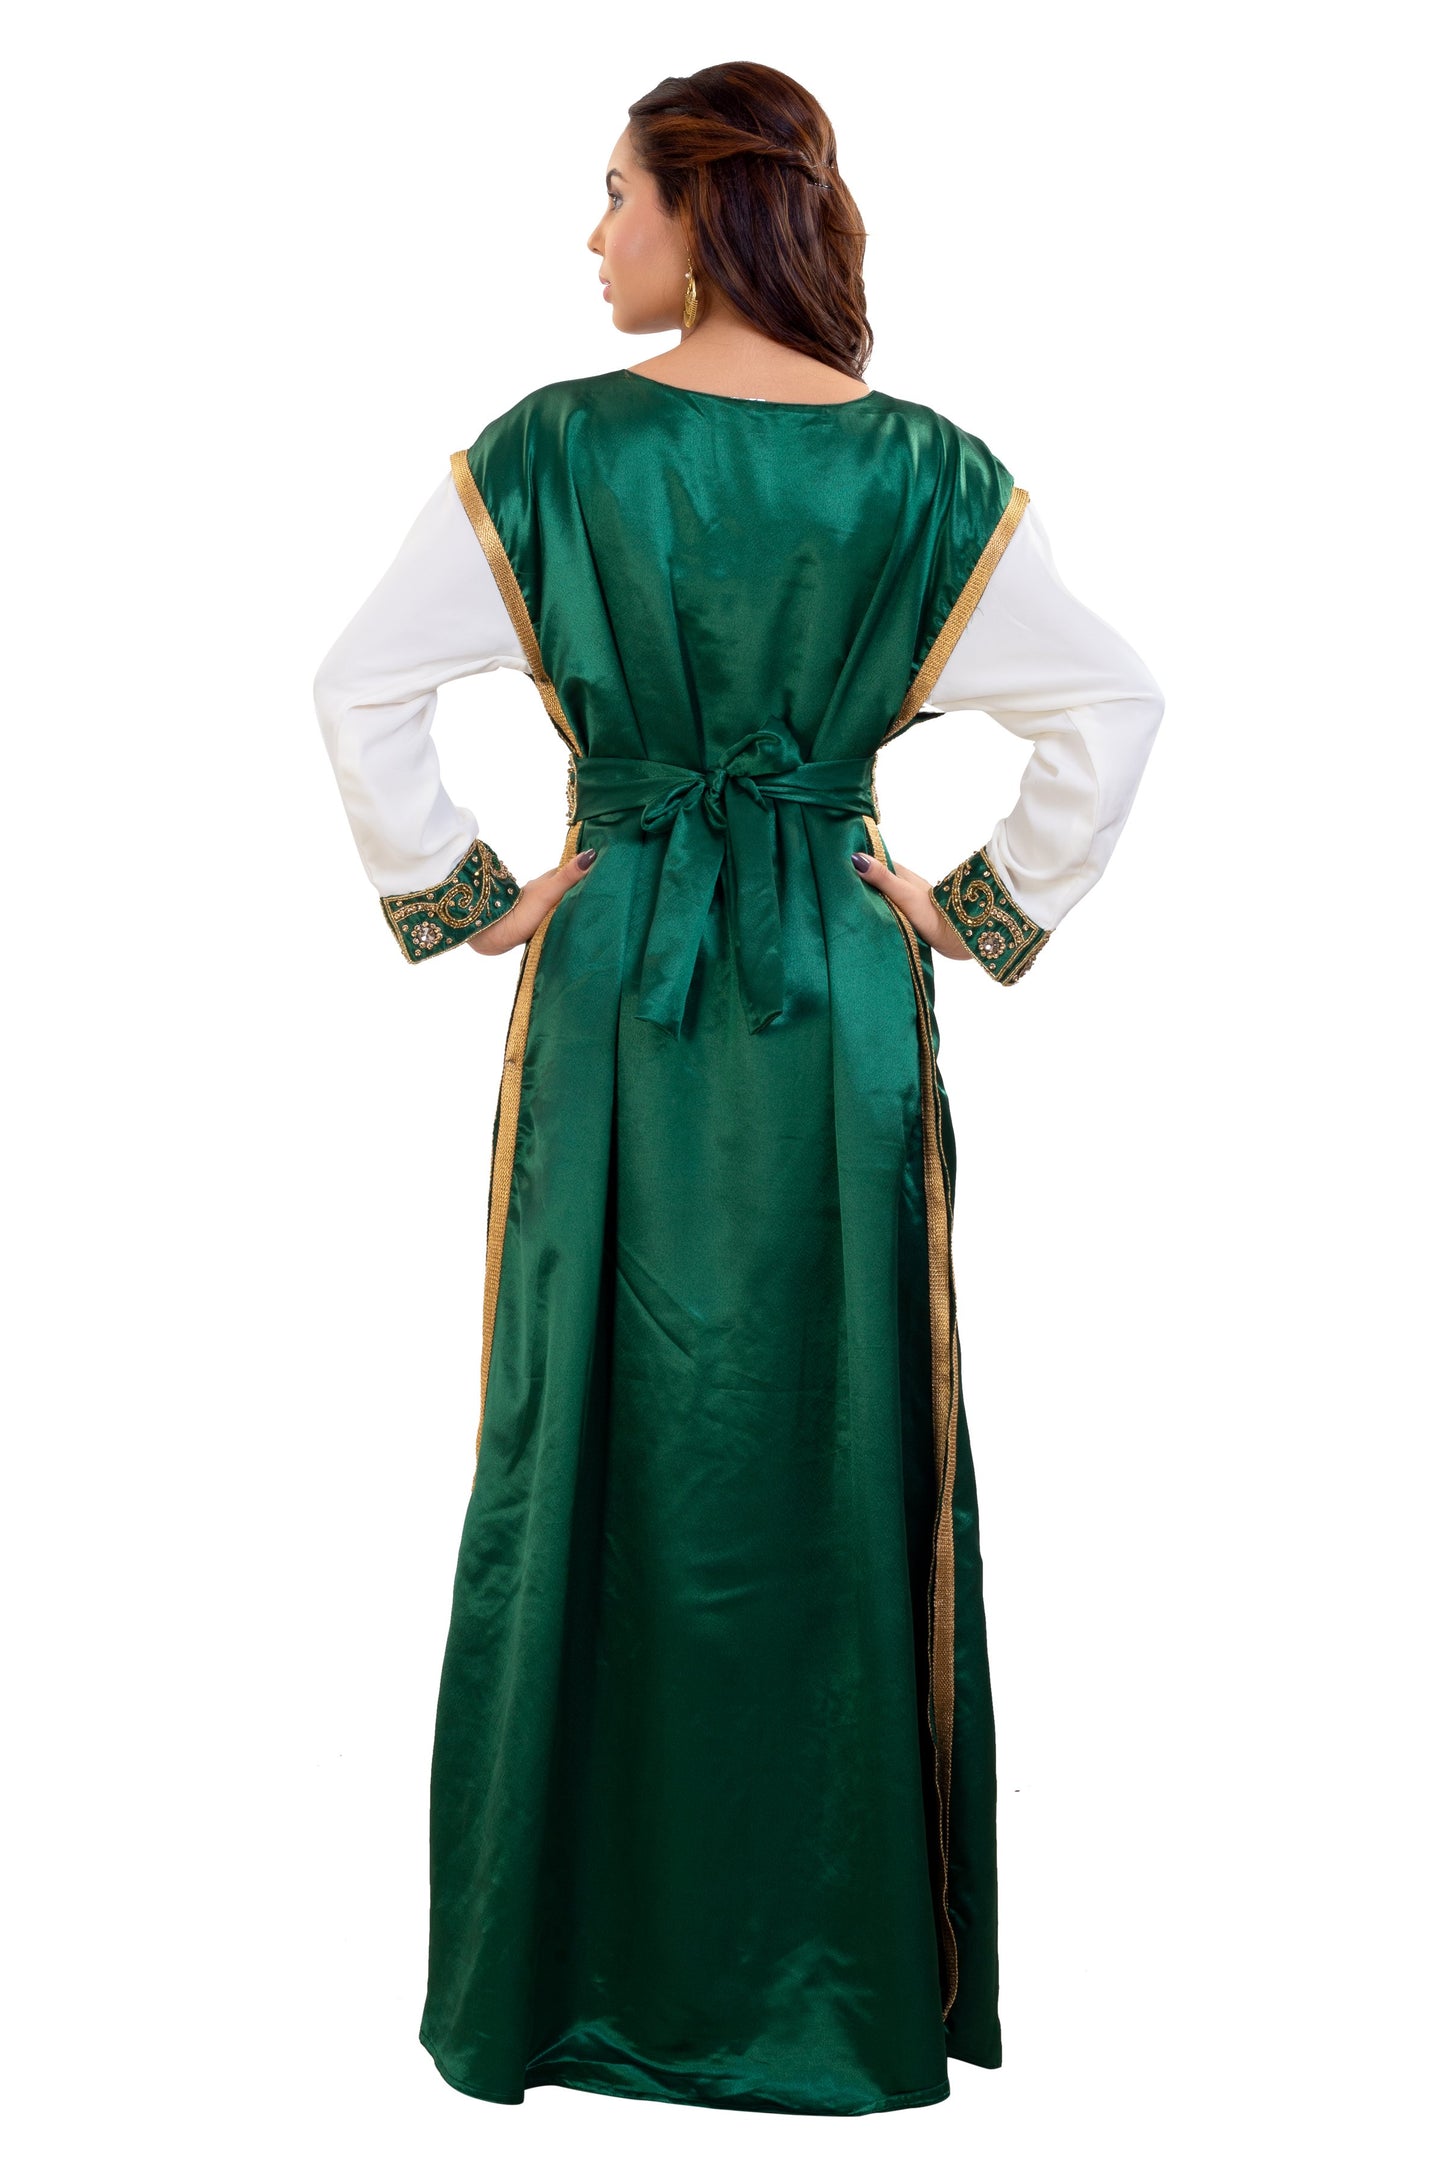 Arabian Gown in Emerald Green 3 piece Satin Niqah Dress - Maxim Creation